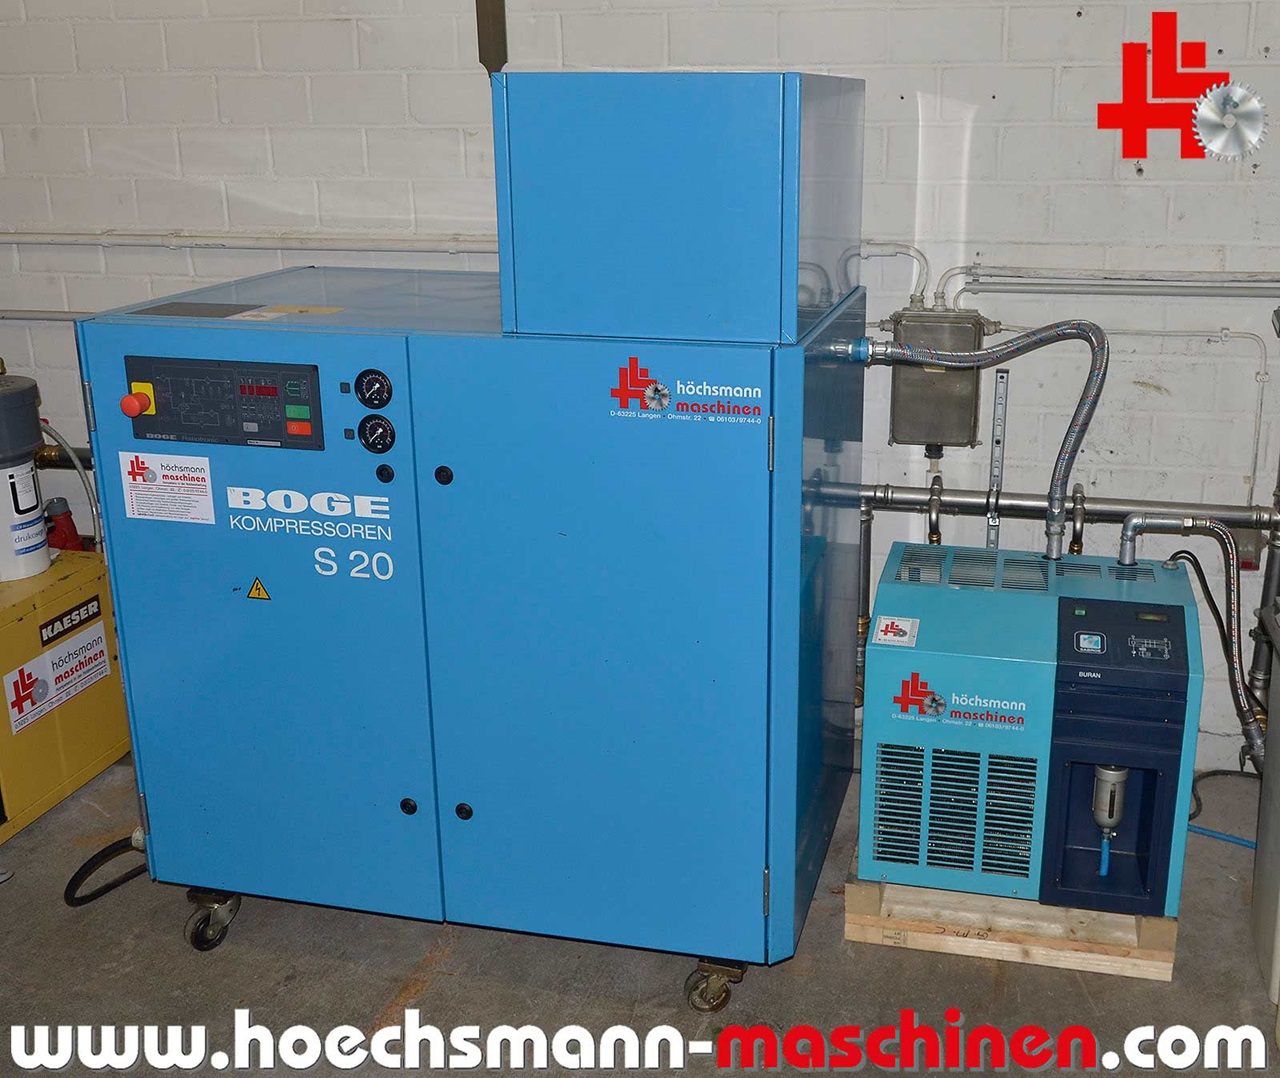 BOGE Schraubenkompressor S20, Holzbearbeitungsmaschinen Hessen Höchsmann